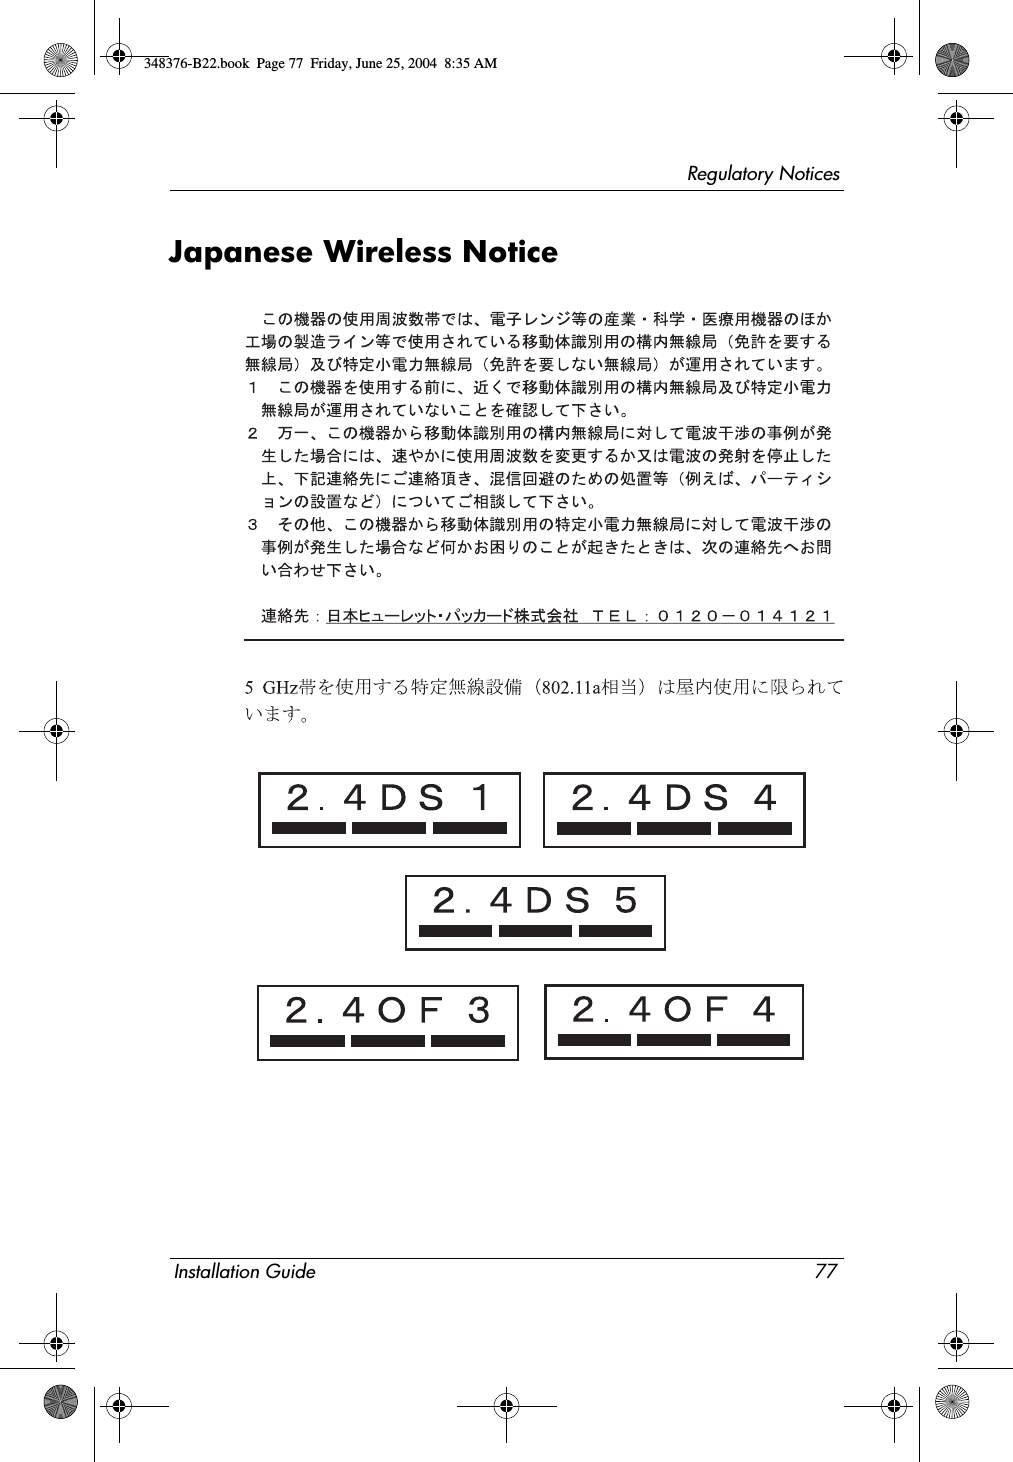 Regulatory NoticesInstallation Guide 77Japanese Wireless Notice348376-B22.book  Page 77  Friday, June 25, 2004  8:35 AM